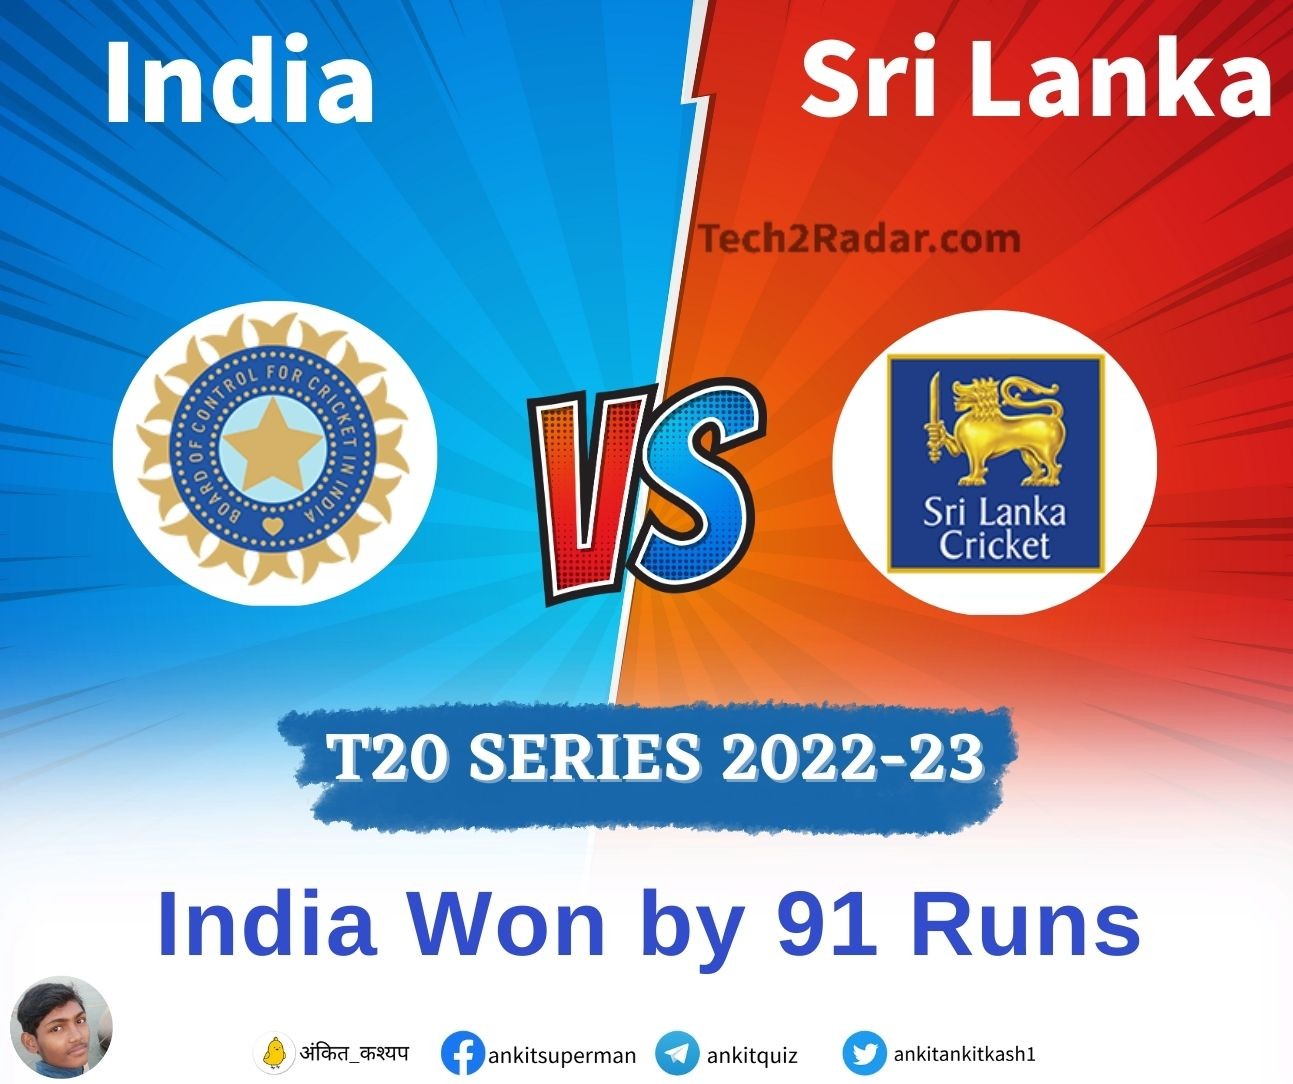 Team India defeated Sri Lanka by 91 runs